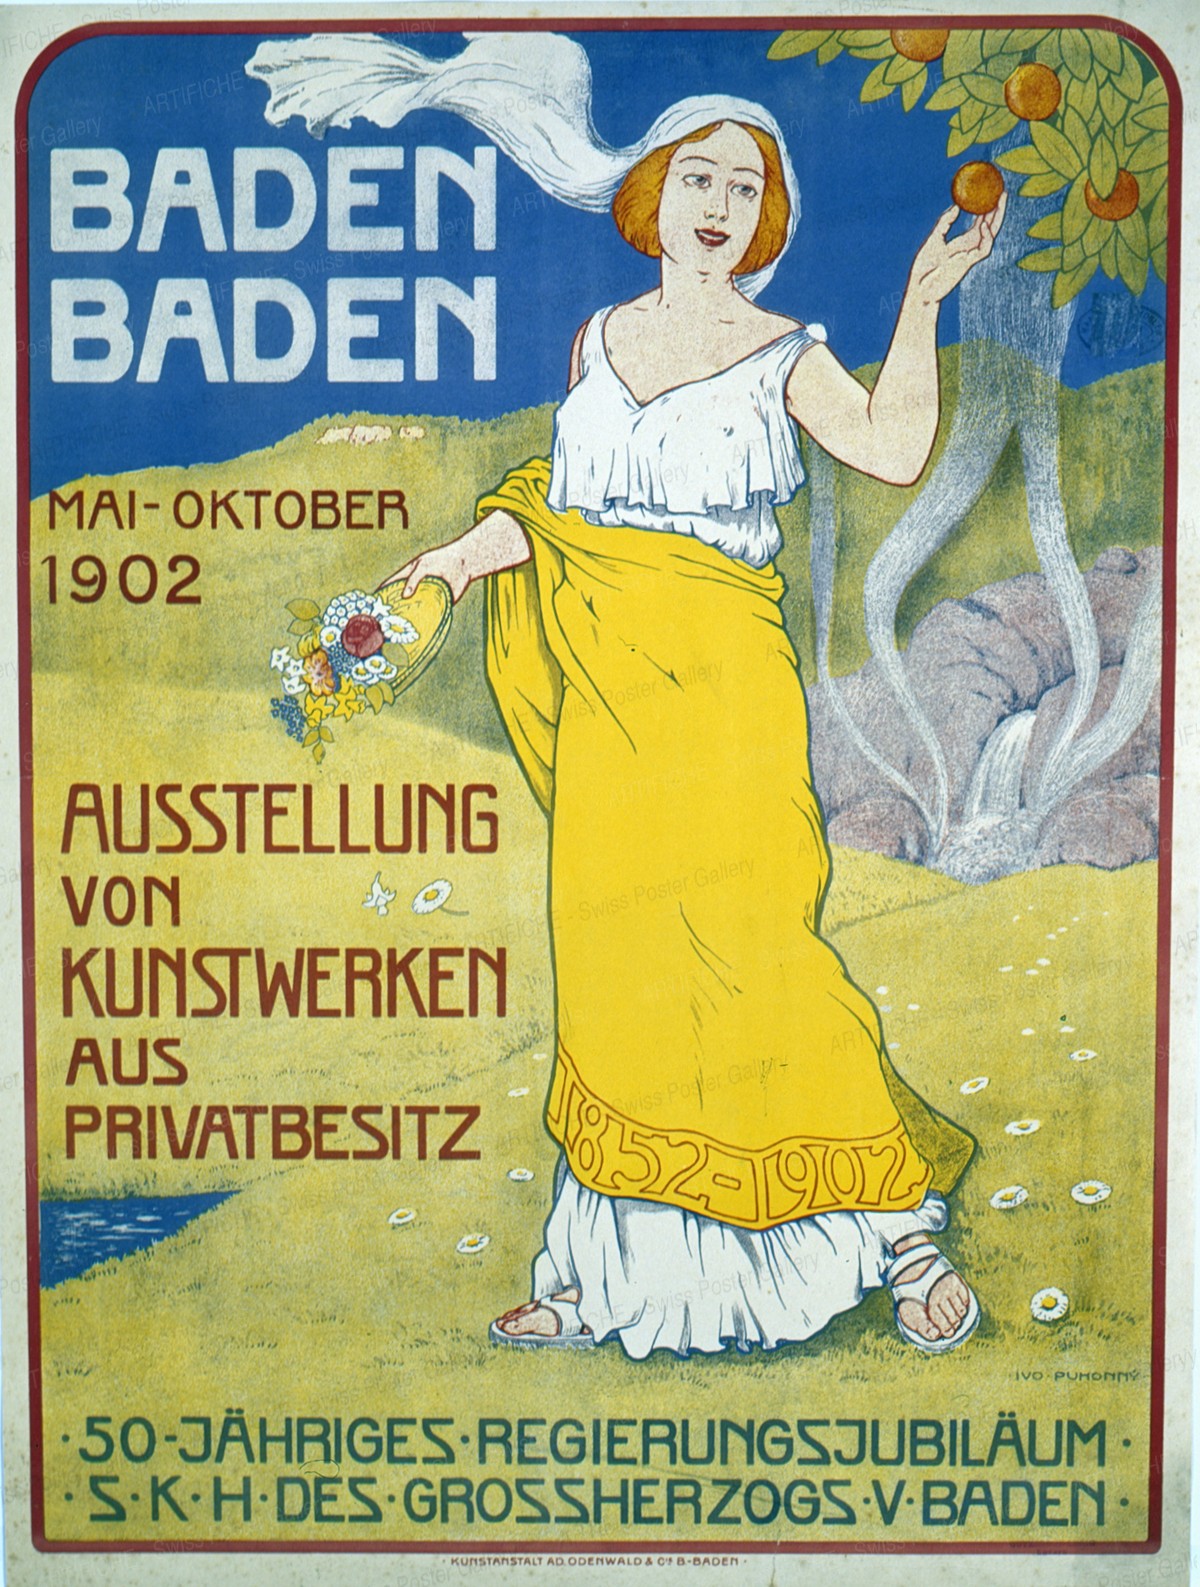 Baden Baden Exhibition of Masterpieces, Ivo Puhony